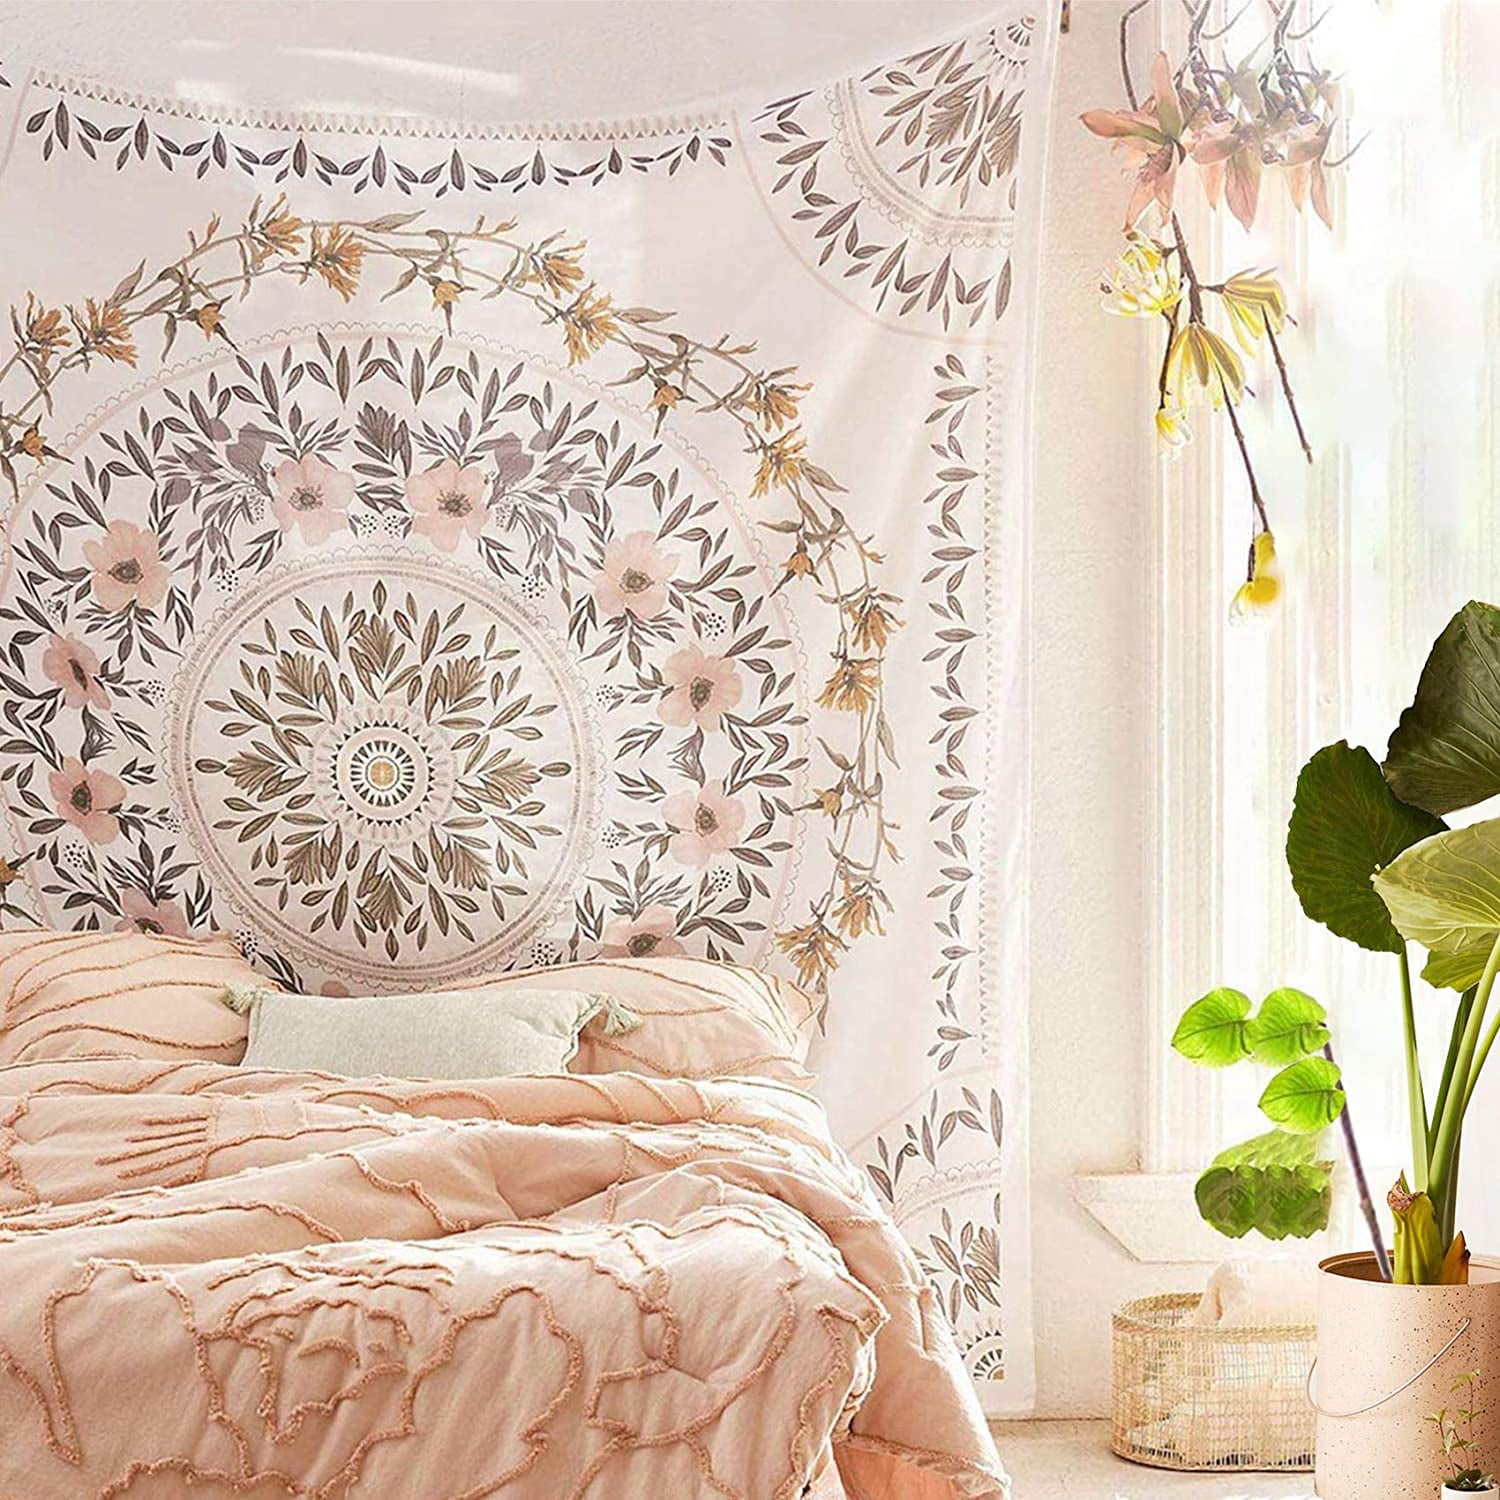 Indian Wall Tapestry Large Bedroom Dorm Decor, Mandala Wall Hanging Bed Sheets 